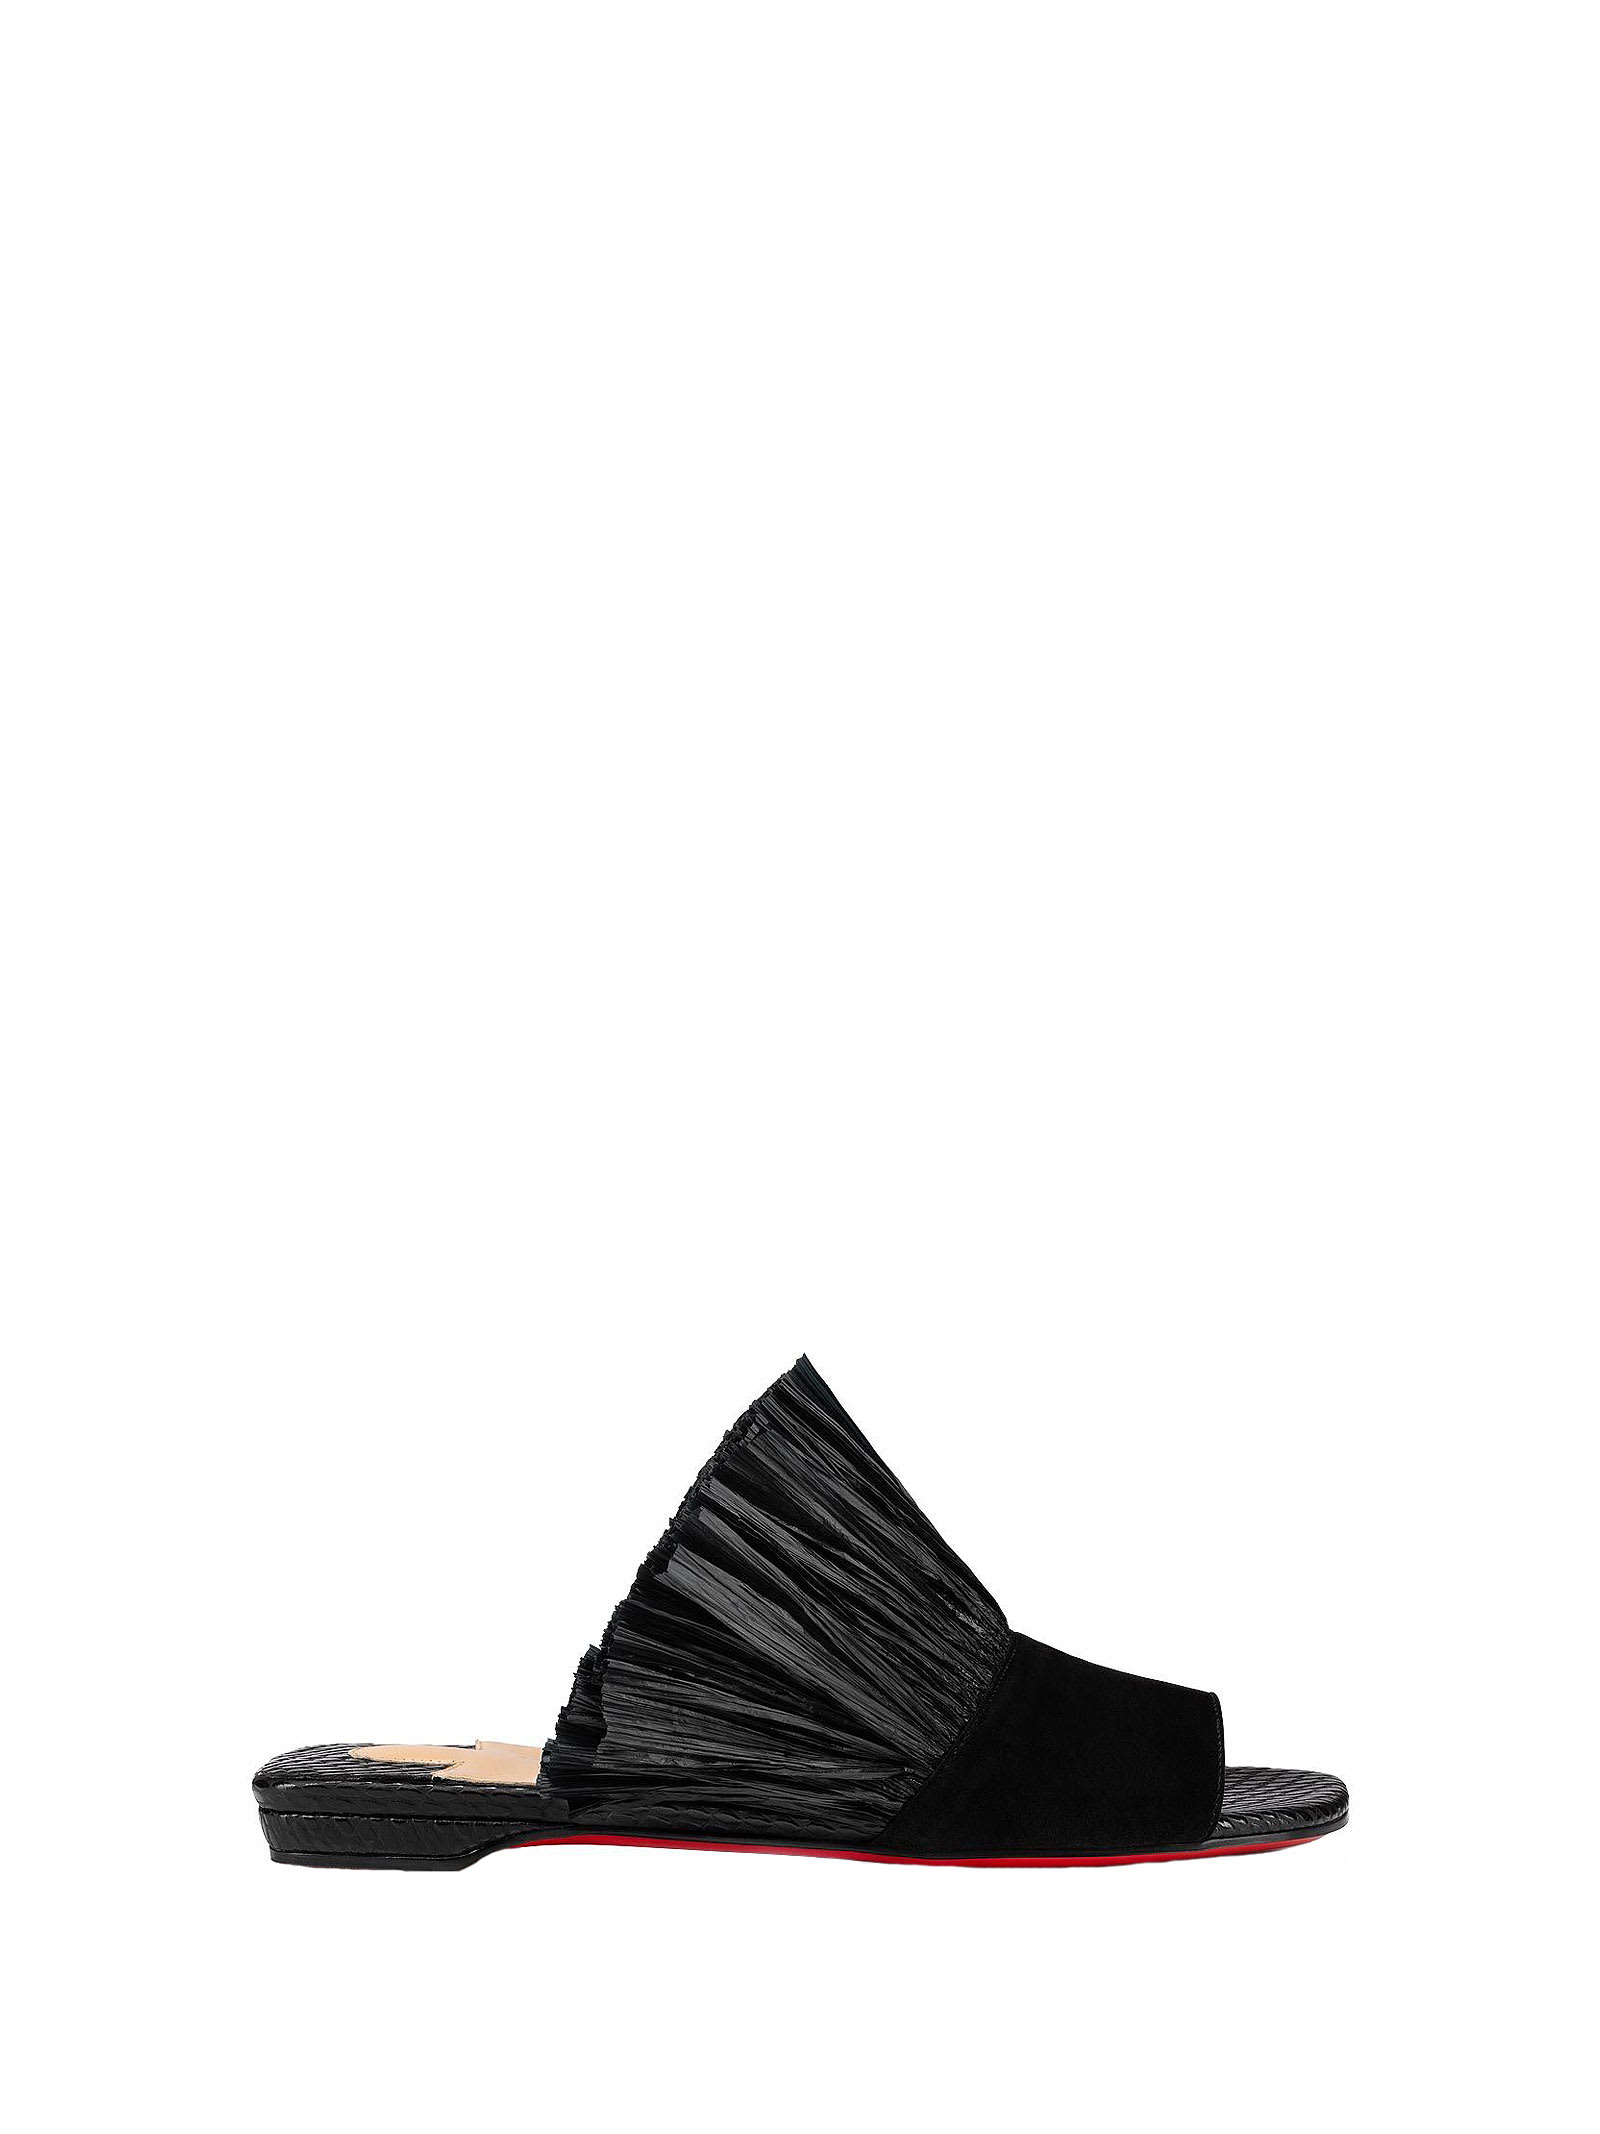 Buy Christian Louboutin Black Sandals online, shop Christian Louboutin shoes with free shipping